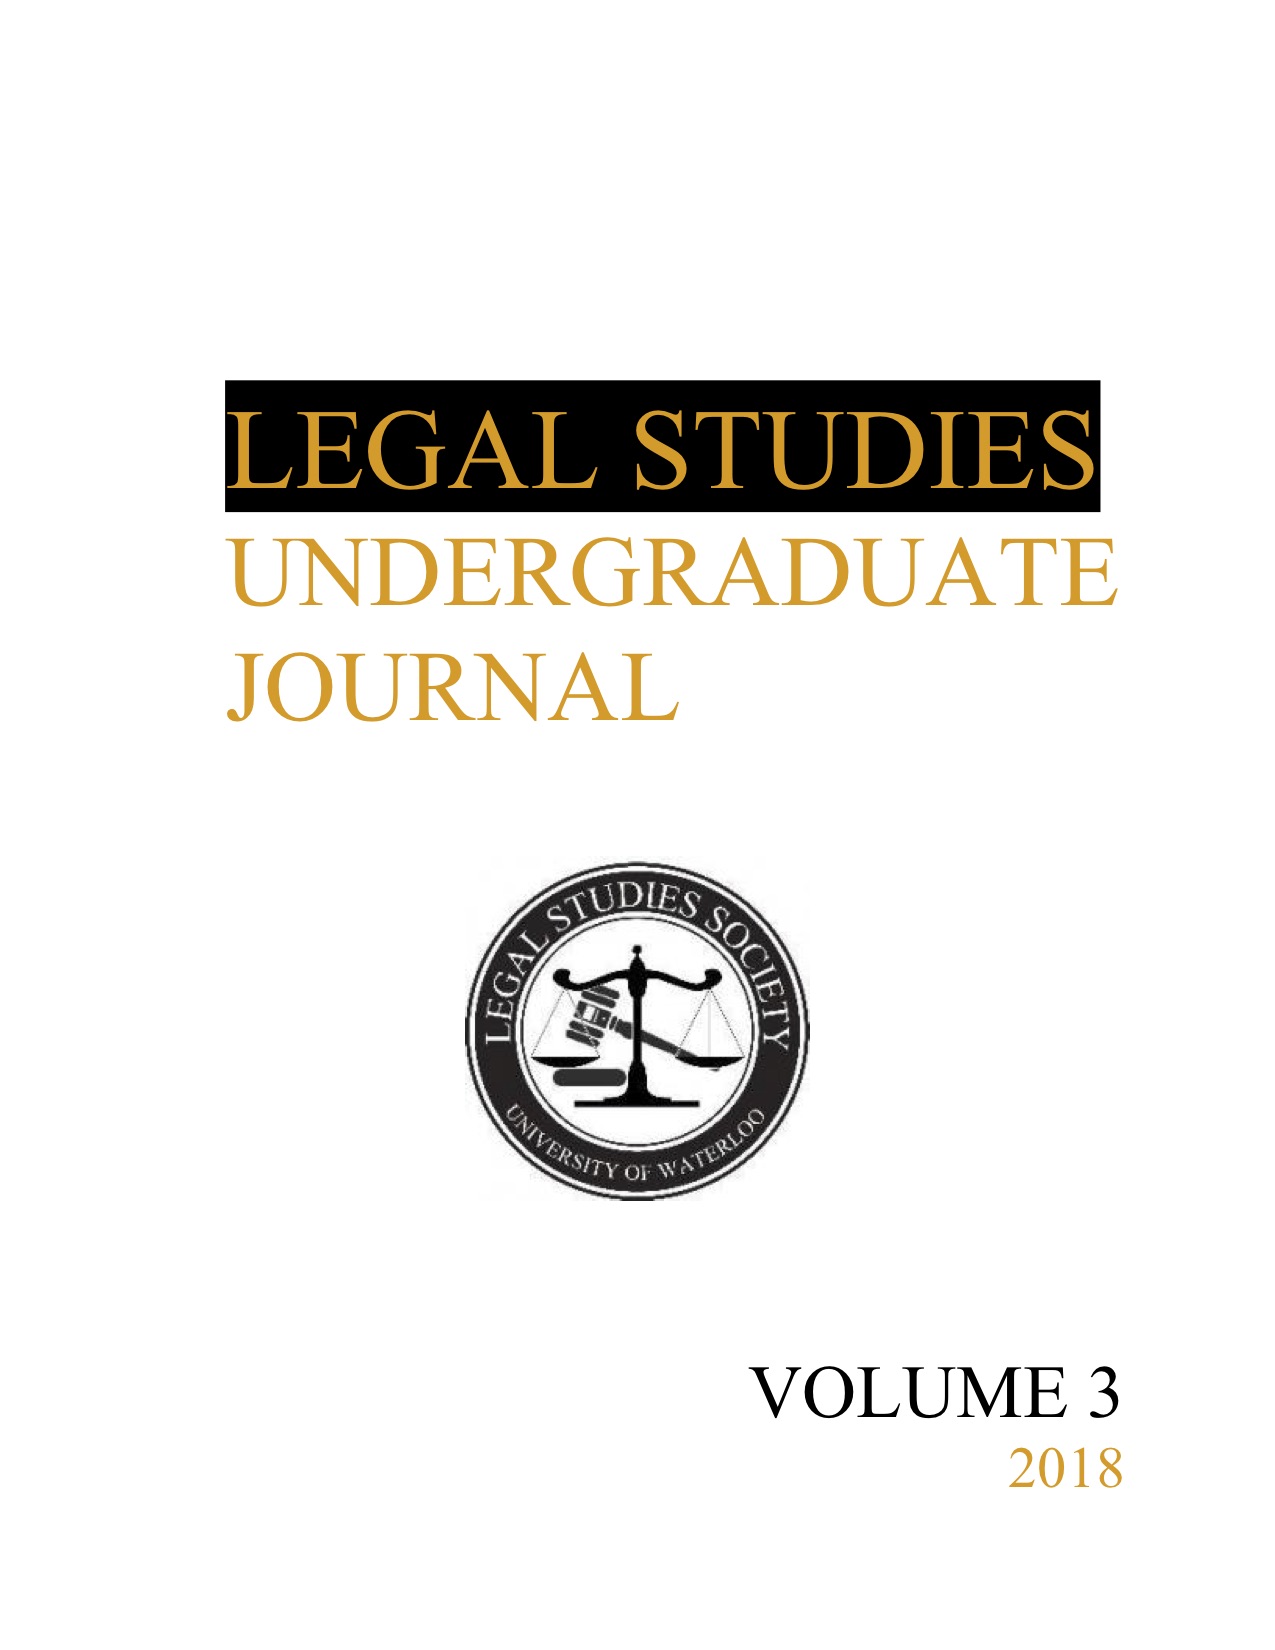 					View Vol. 3 (2018): Legal Studies Undergraduate Journal Volume 3
				